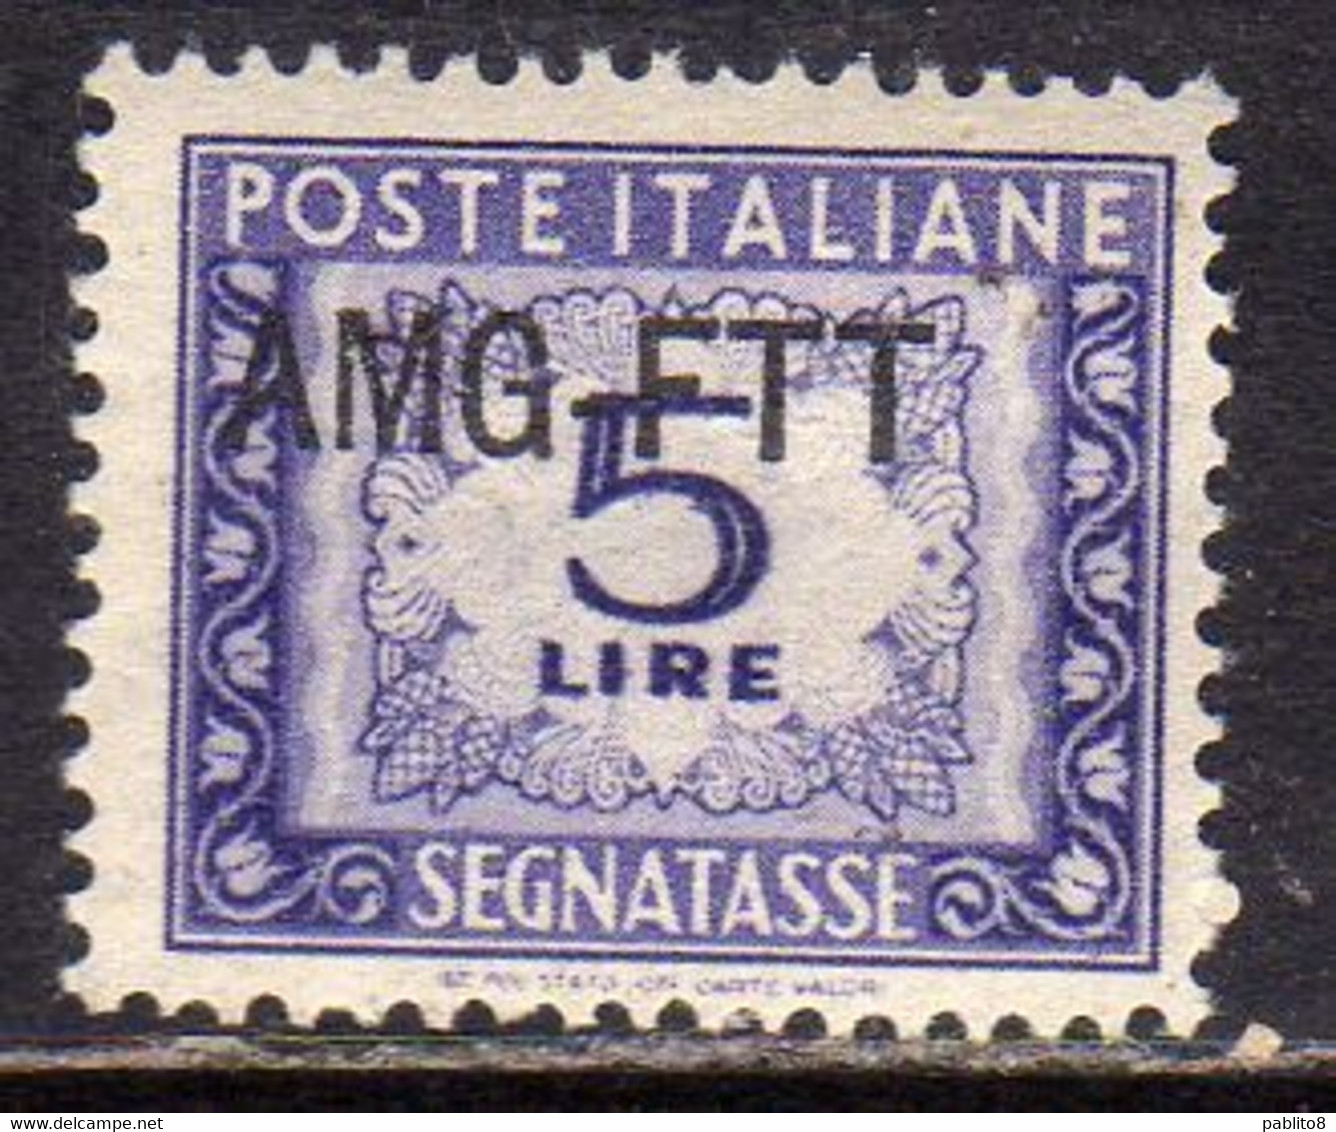 TRIESTE A 1949 1954 VARIETÀ VARIETY AMG-FTT SOPRASTAMPATO D'ITALIA ITALY SEGNATASSE POSTAGE DUE TAXES TASSE LIRE 5 MNH - Segnatasse